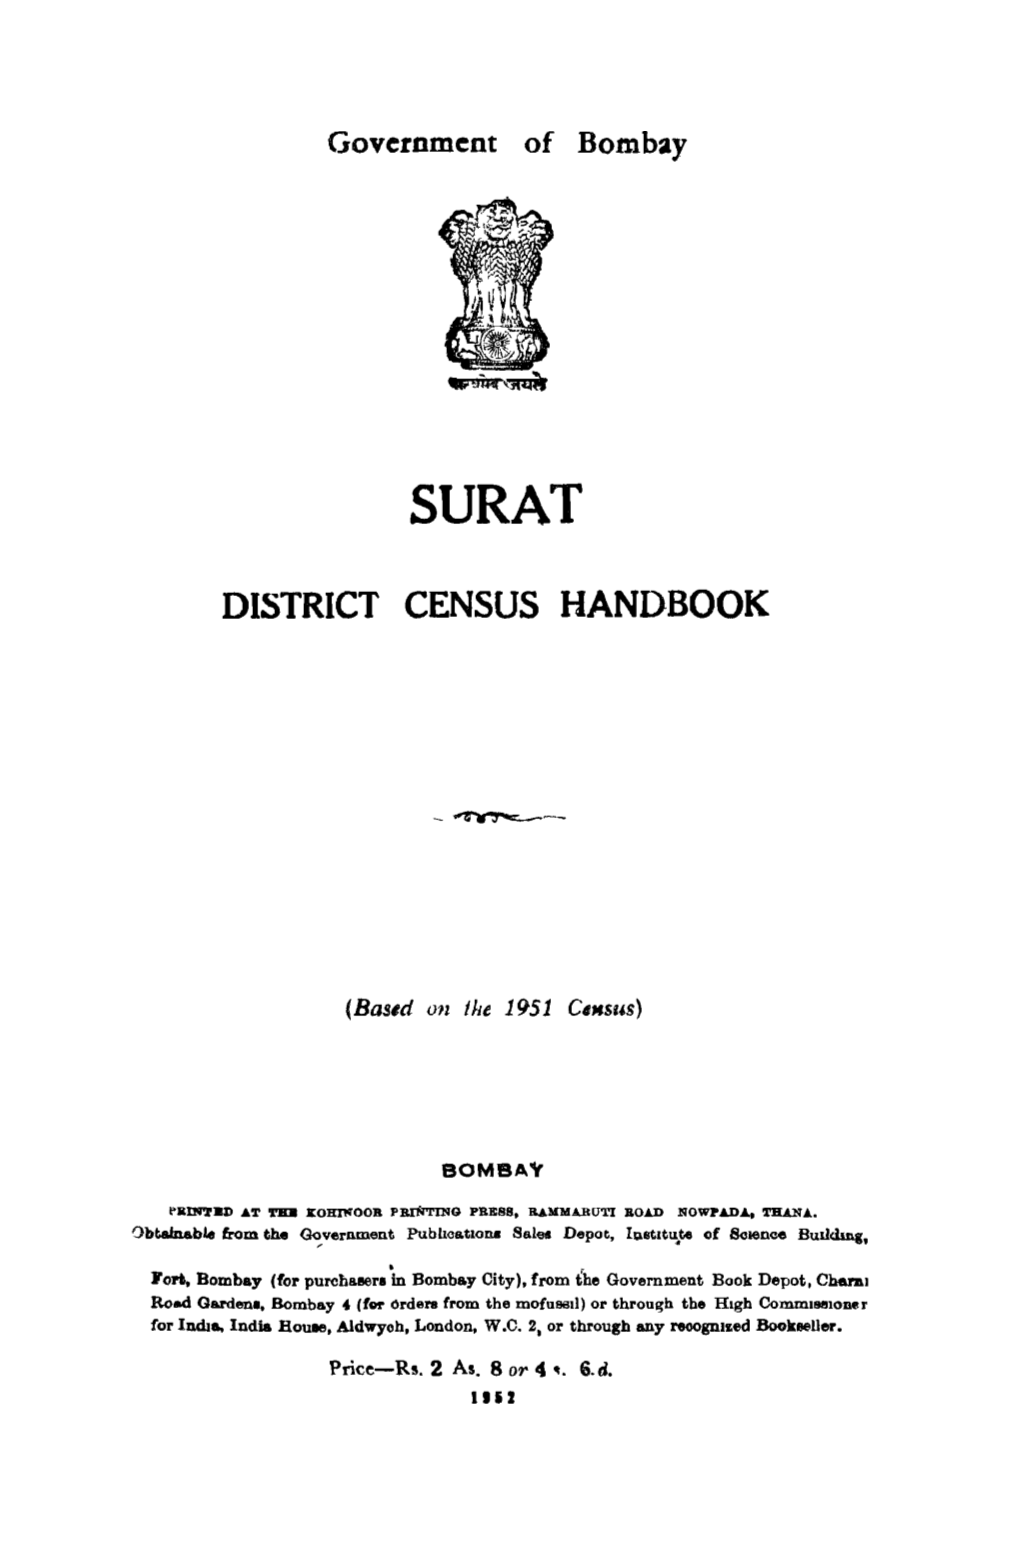 District Census Handbook, Surat